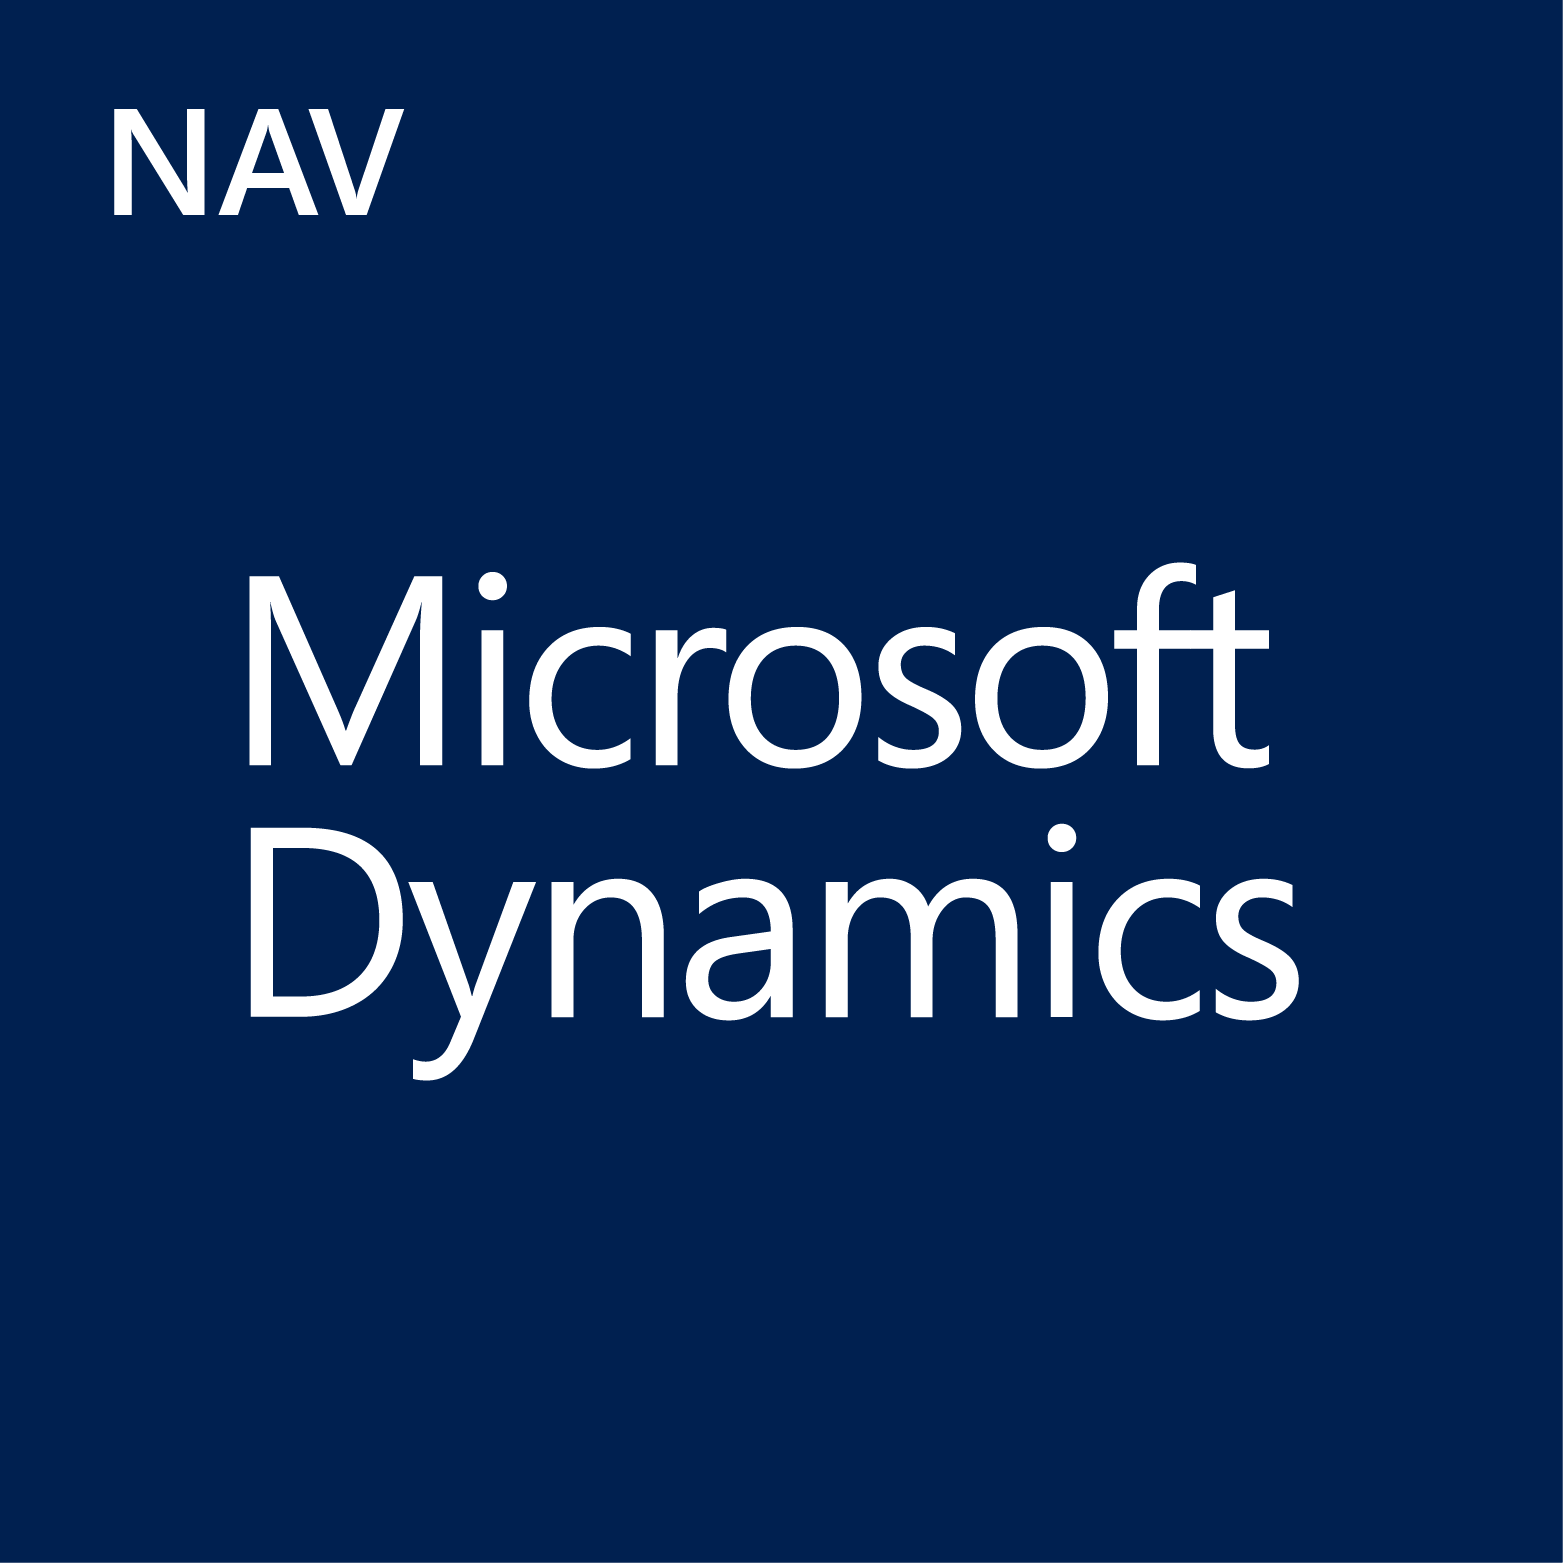 Nav Logo - New Microsoft Dynamics Logo | Encore Business Solutions